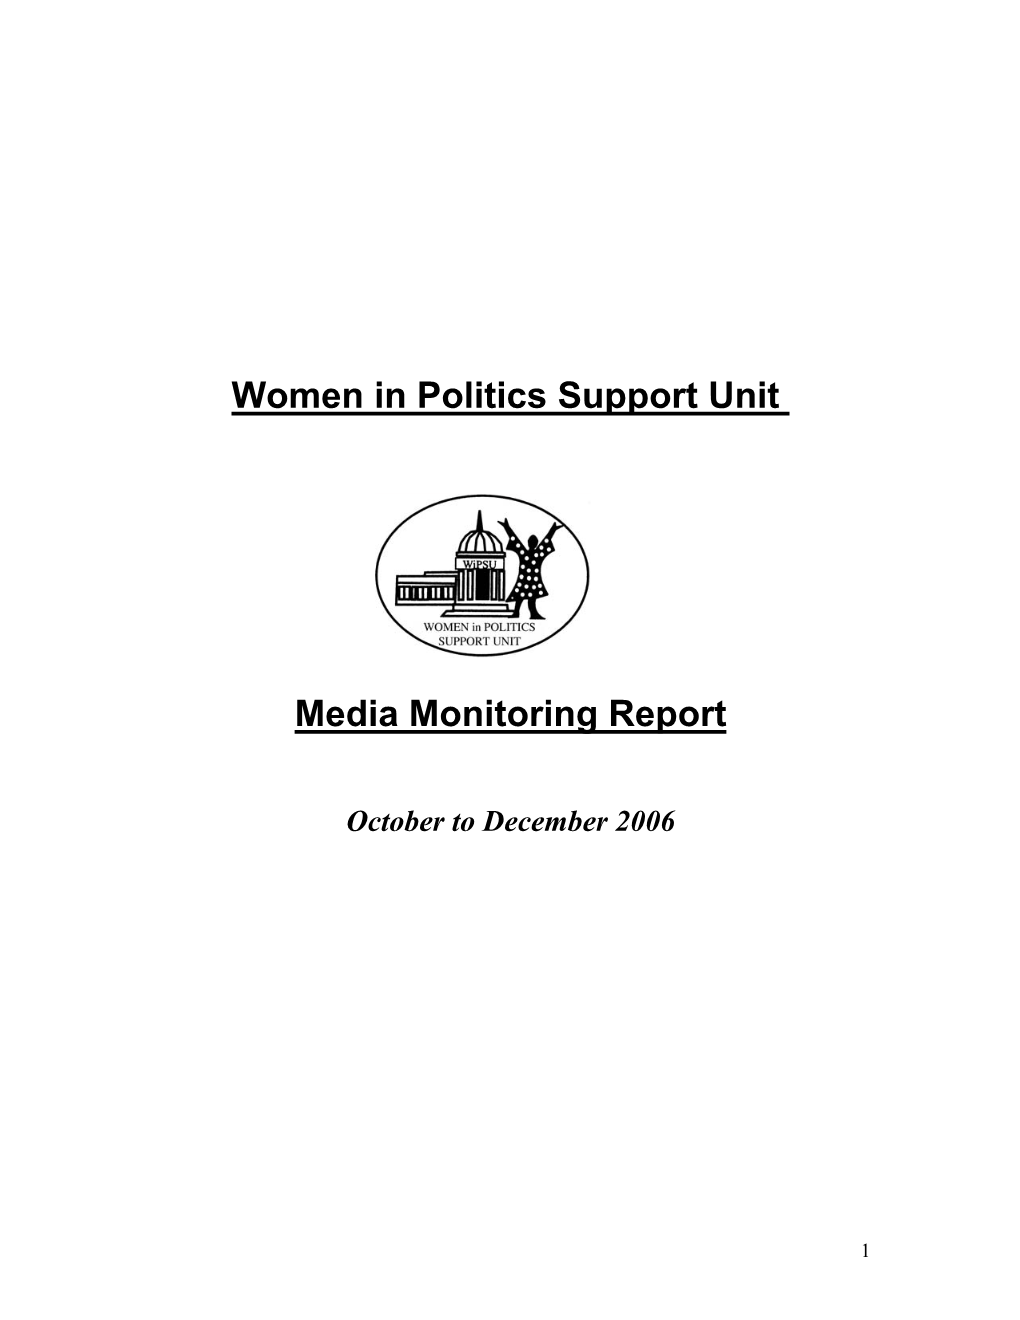 Women in Politics Support Unit Media Monitoring Report